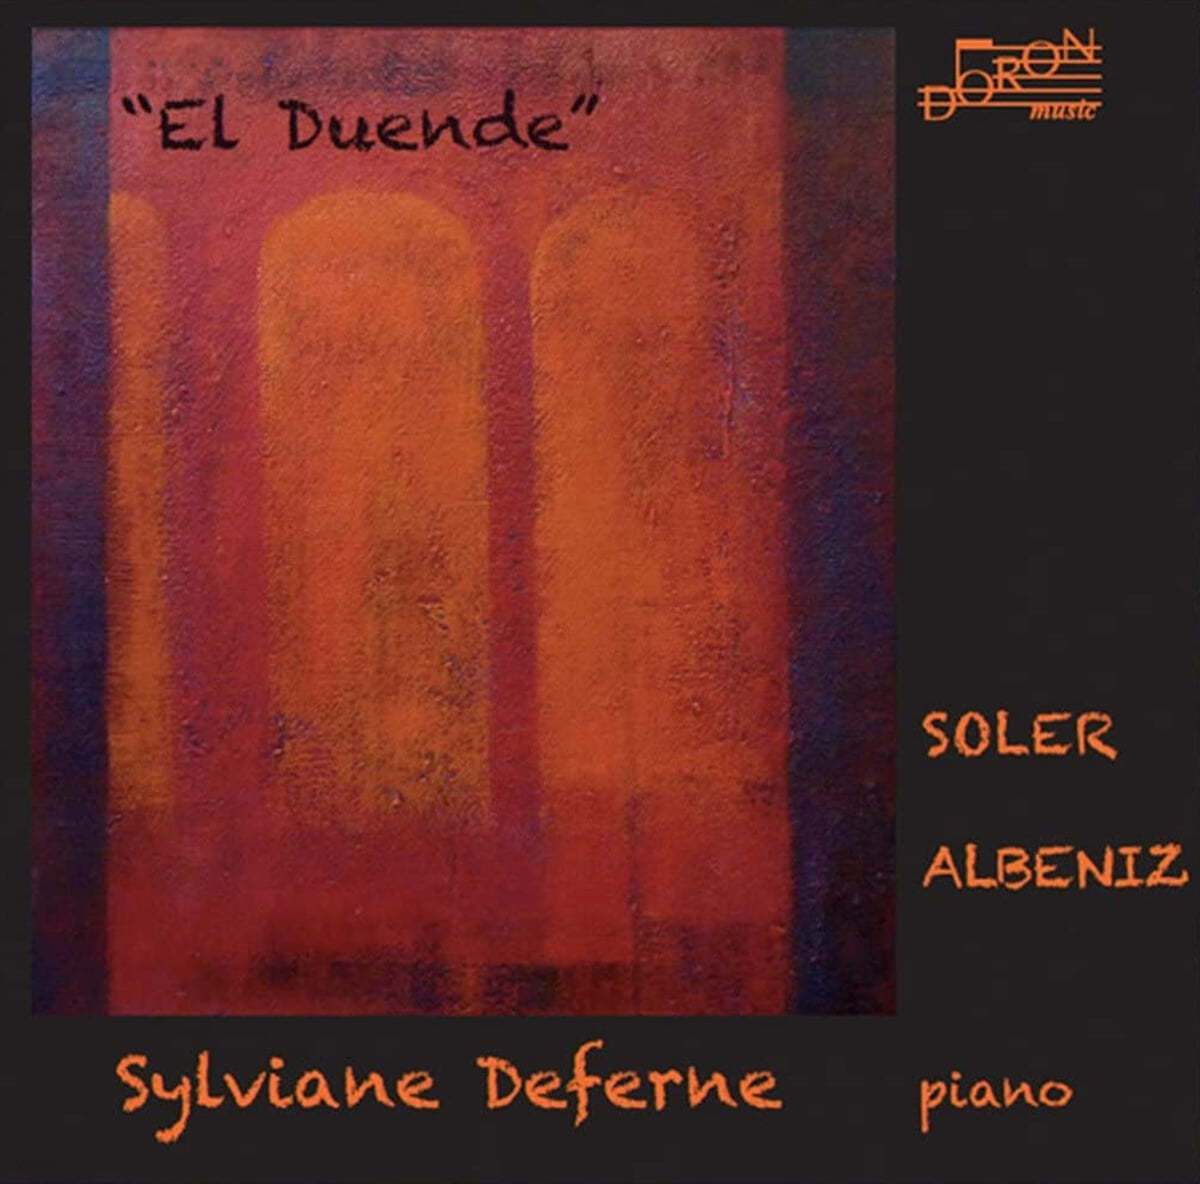 Sylviane Deferne 엘 두엔데: 스페인의 피아노 음악 (Soler / Albeniz - El Duende) 